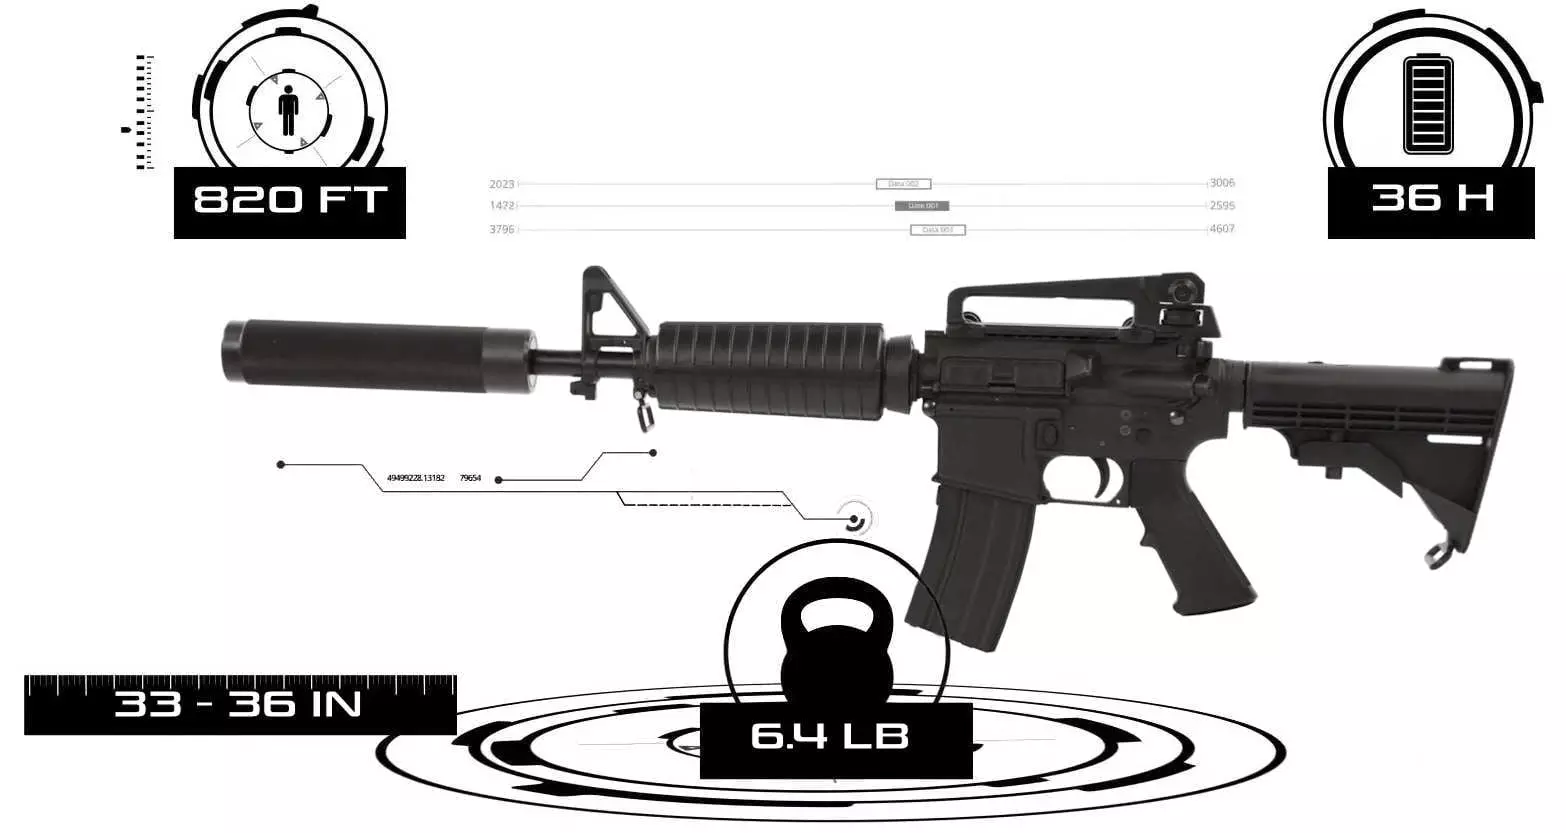 Skat M4 laser tag gun weight and size